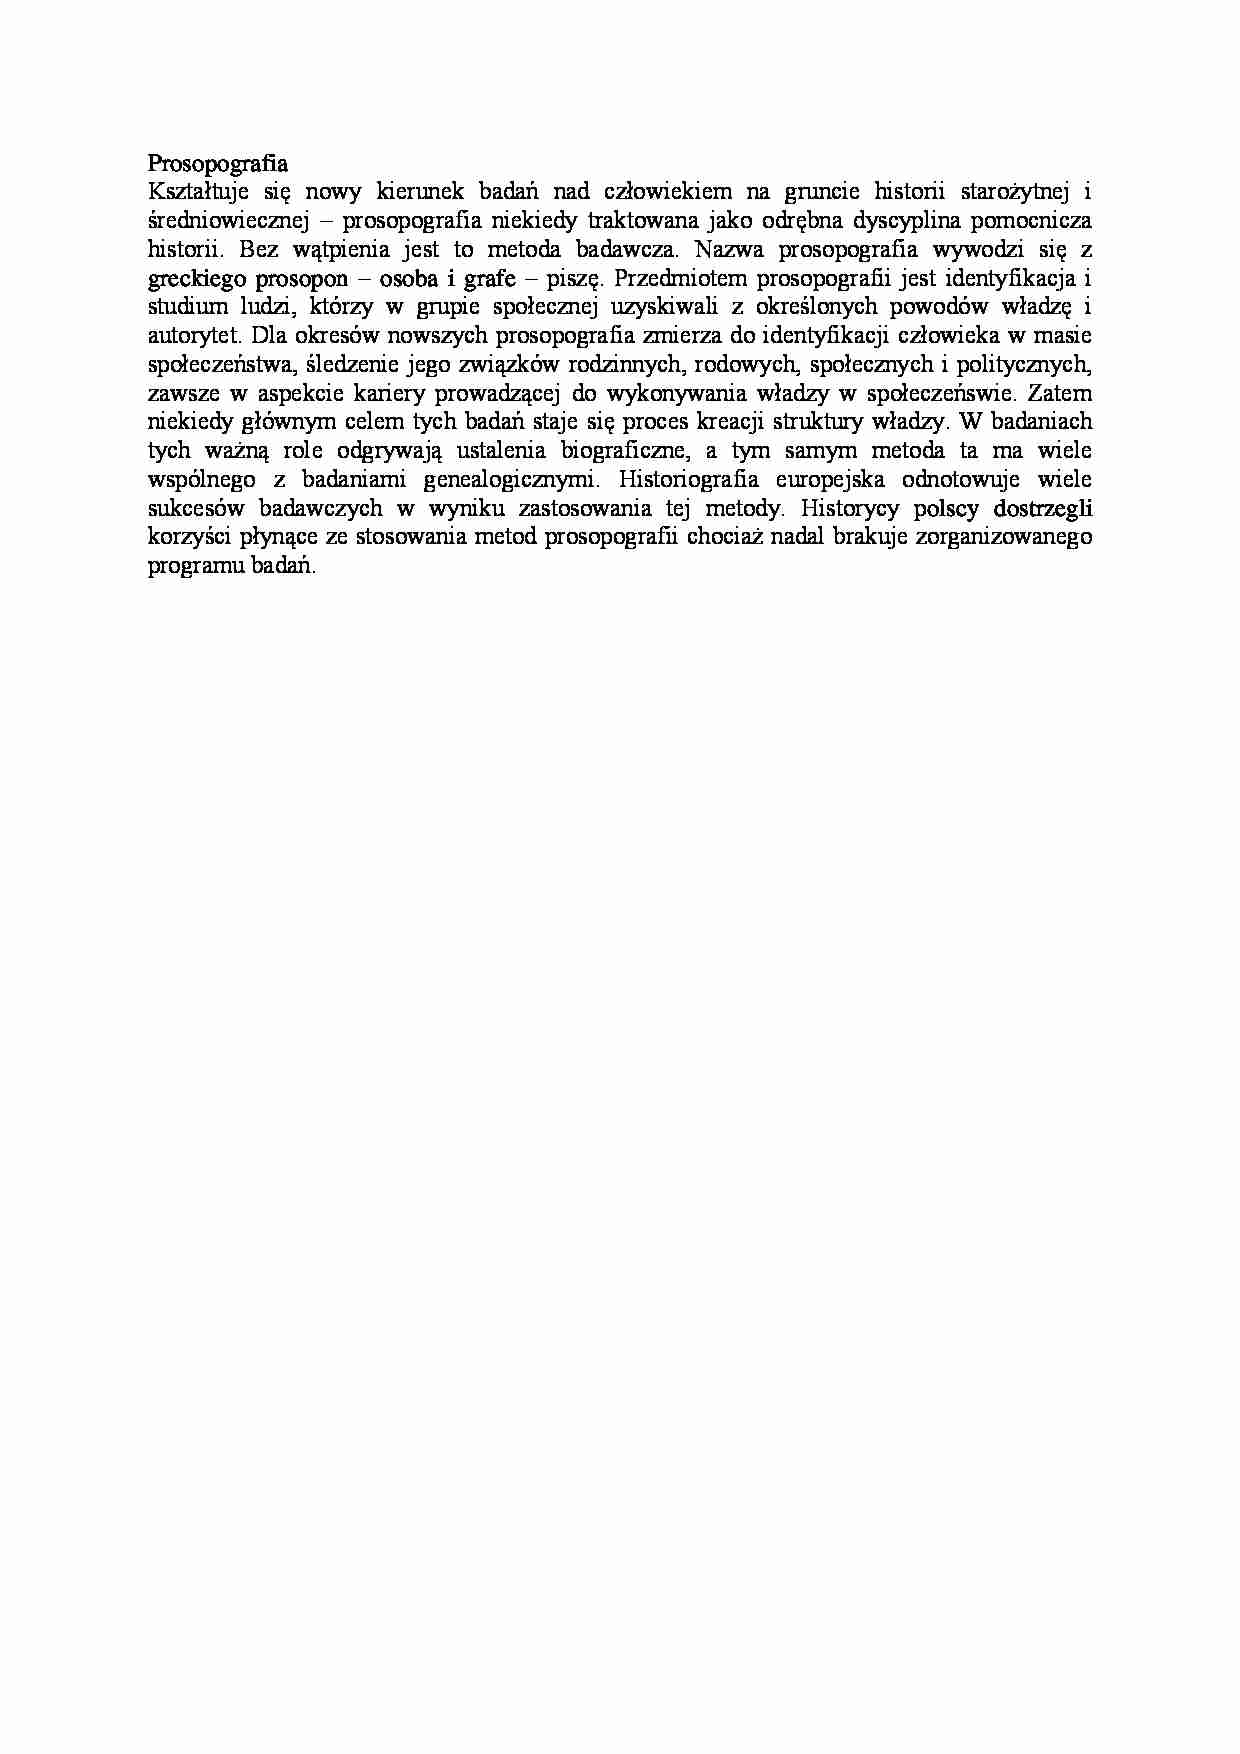 Nauki pomocnicze historii - prosopografia - strona 1